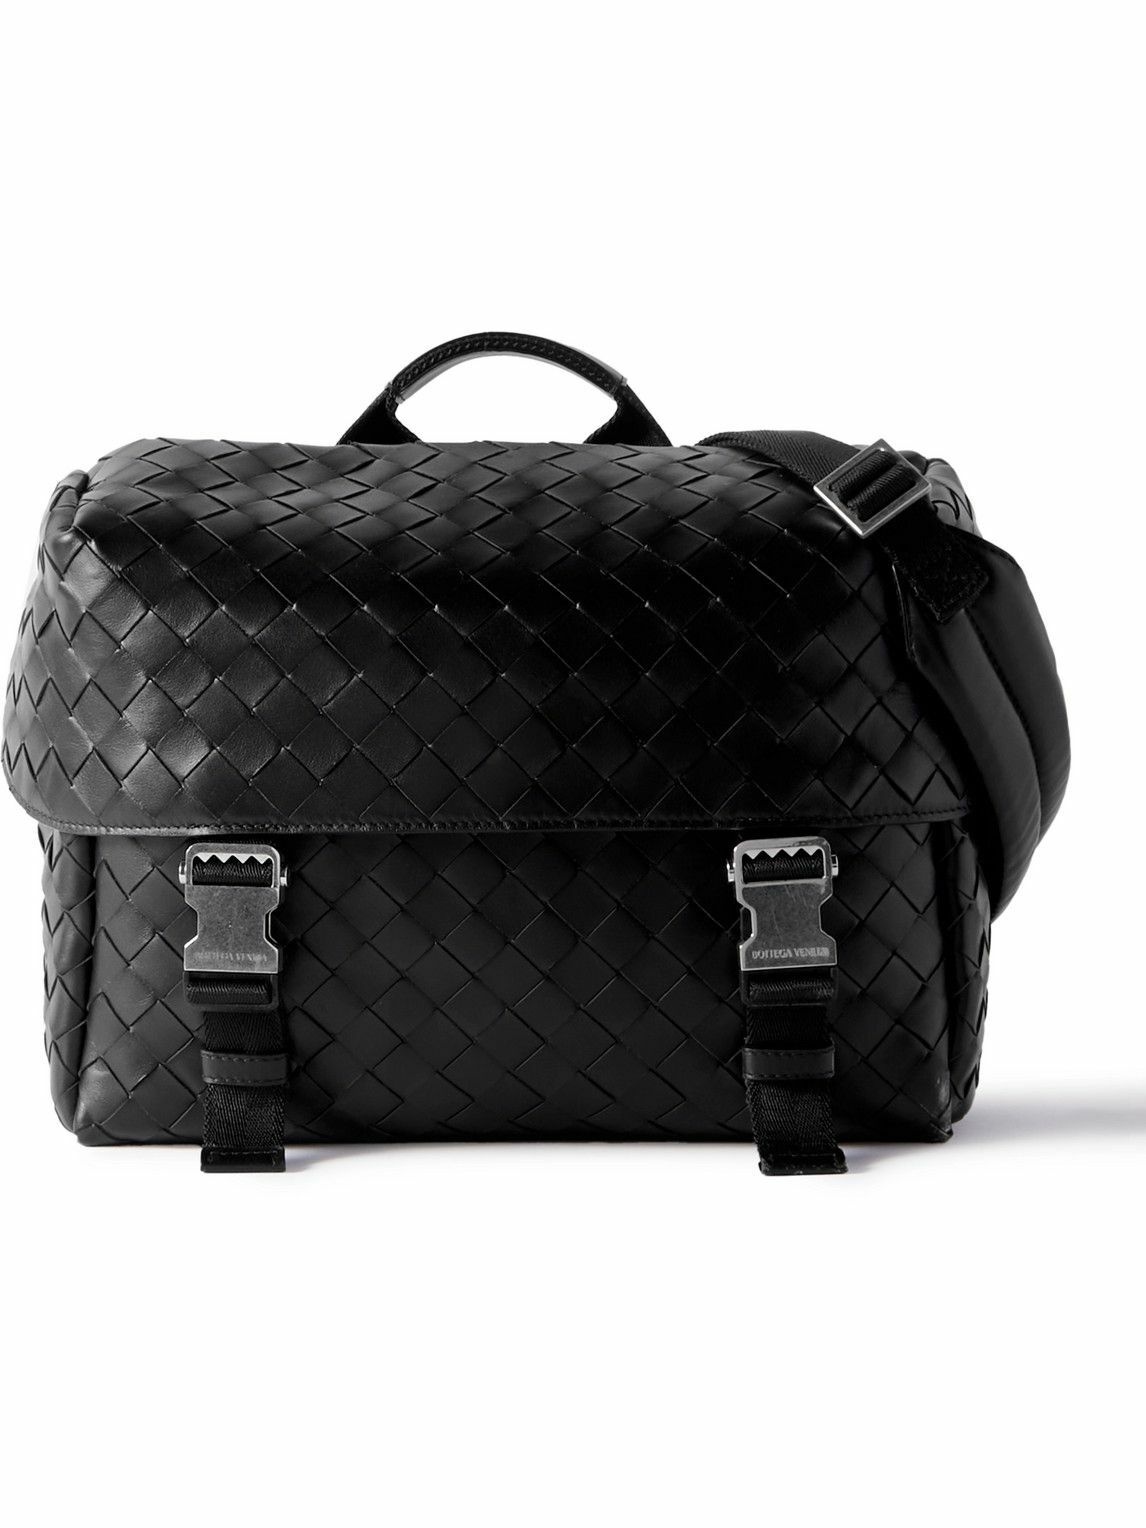 Bottega Veneta - Intrecciato Leather Messenger Bag Bottega Veneta